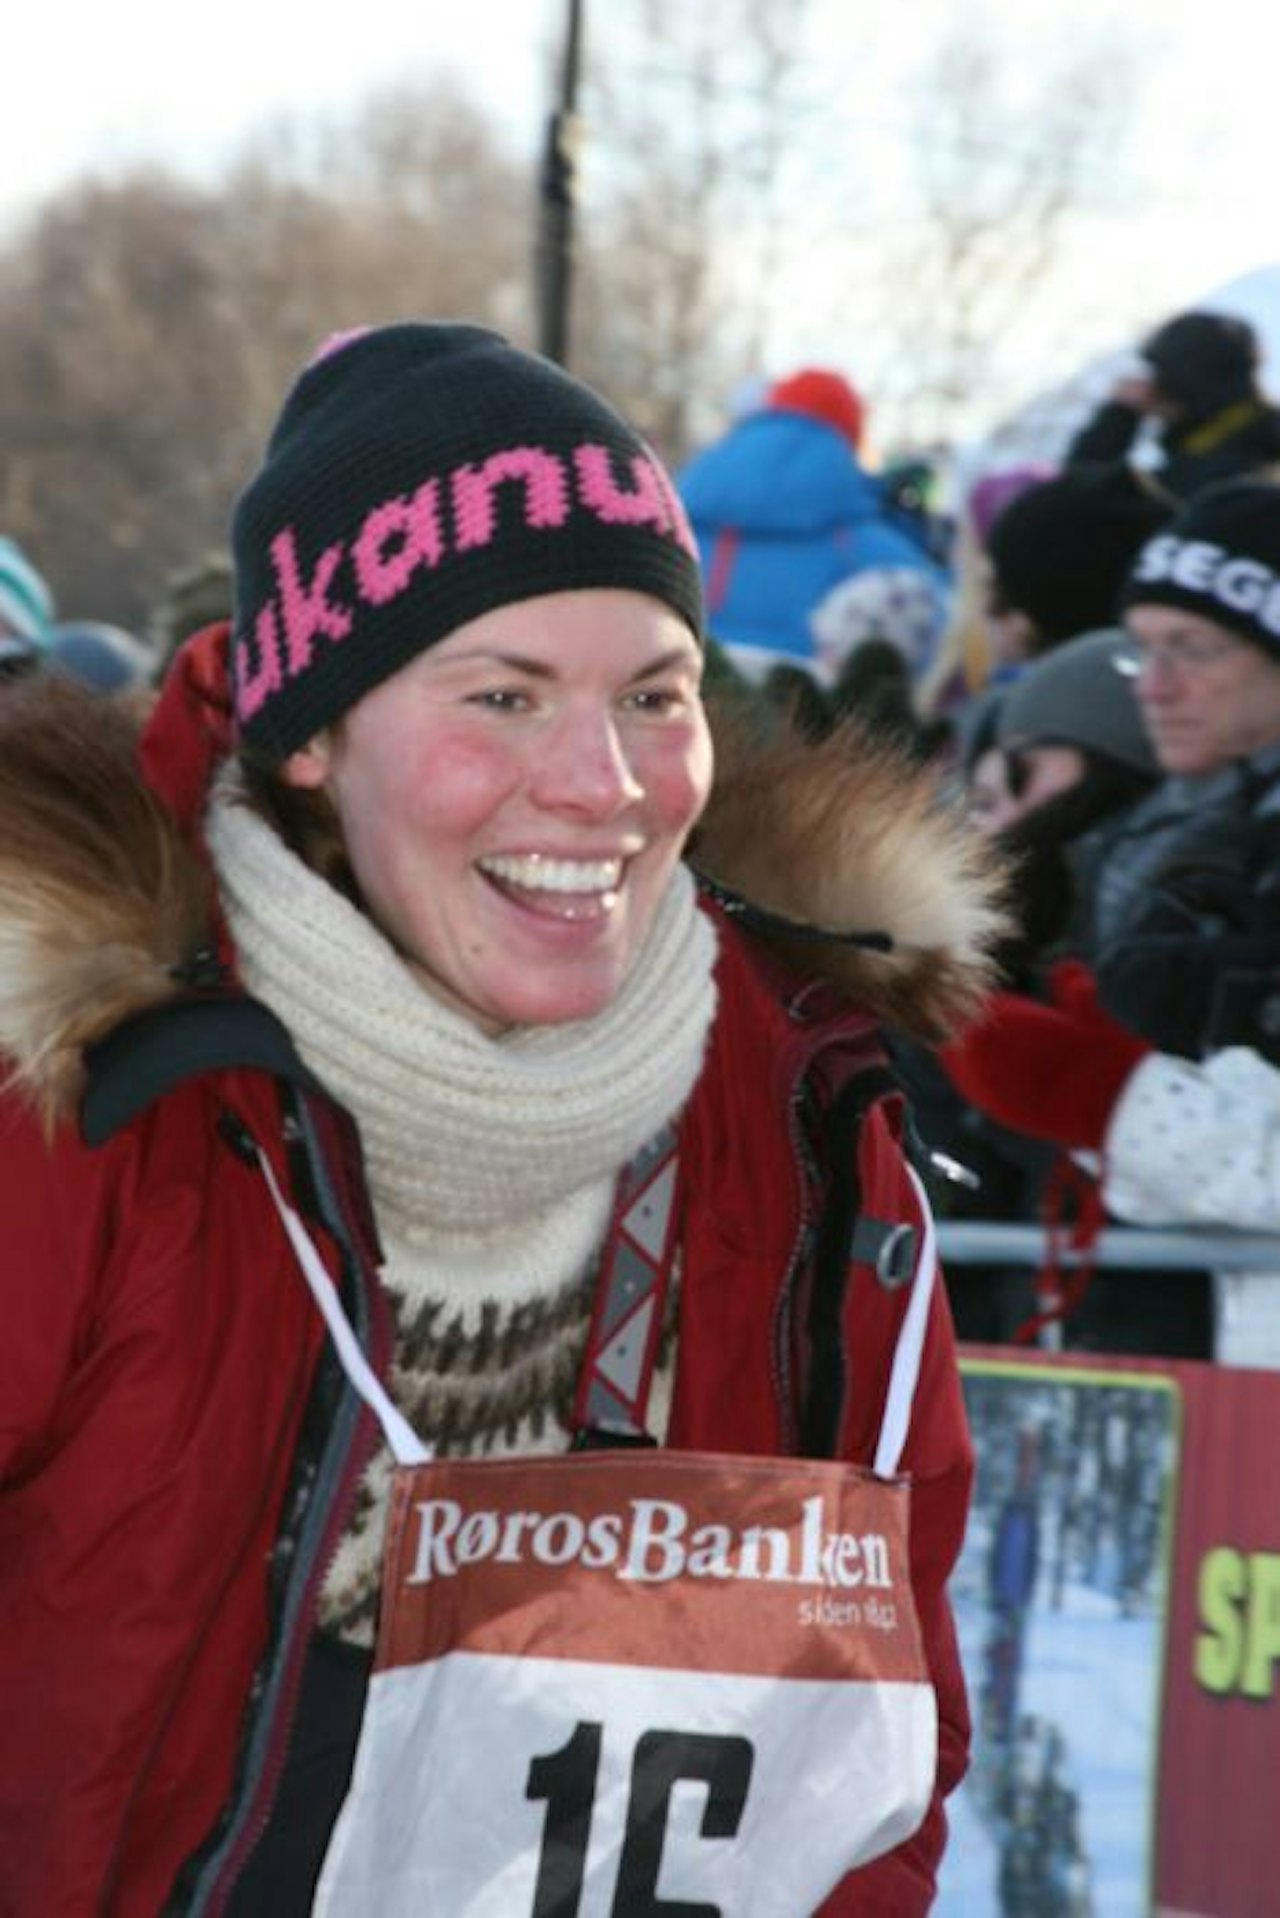 Sigrid Ekran holdt unna for konkurrentene, og krysser mållinja bare tre minutter før Robert Sørlie.  Foto: Femundløpet